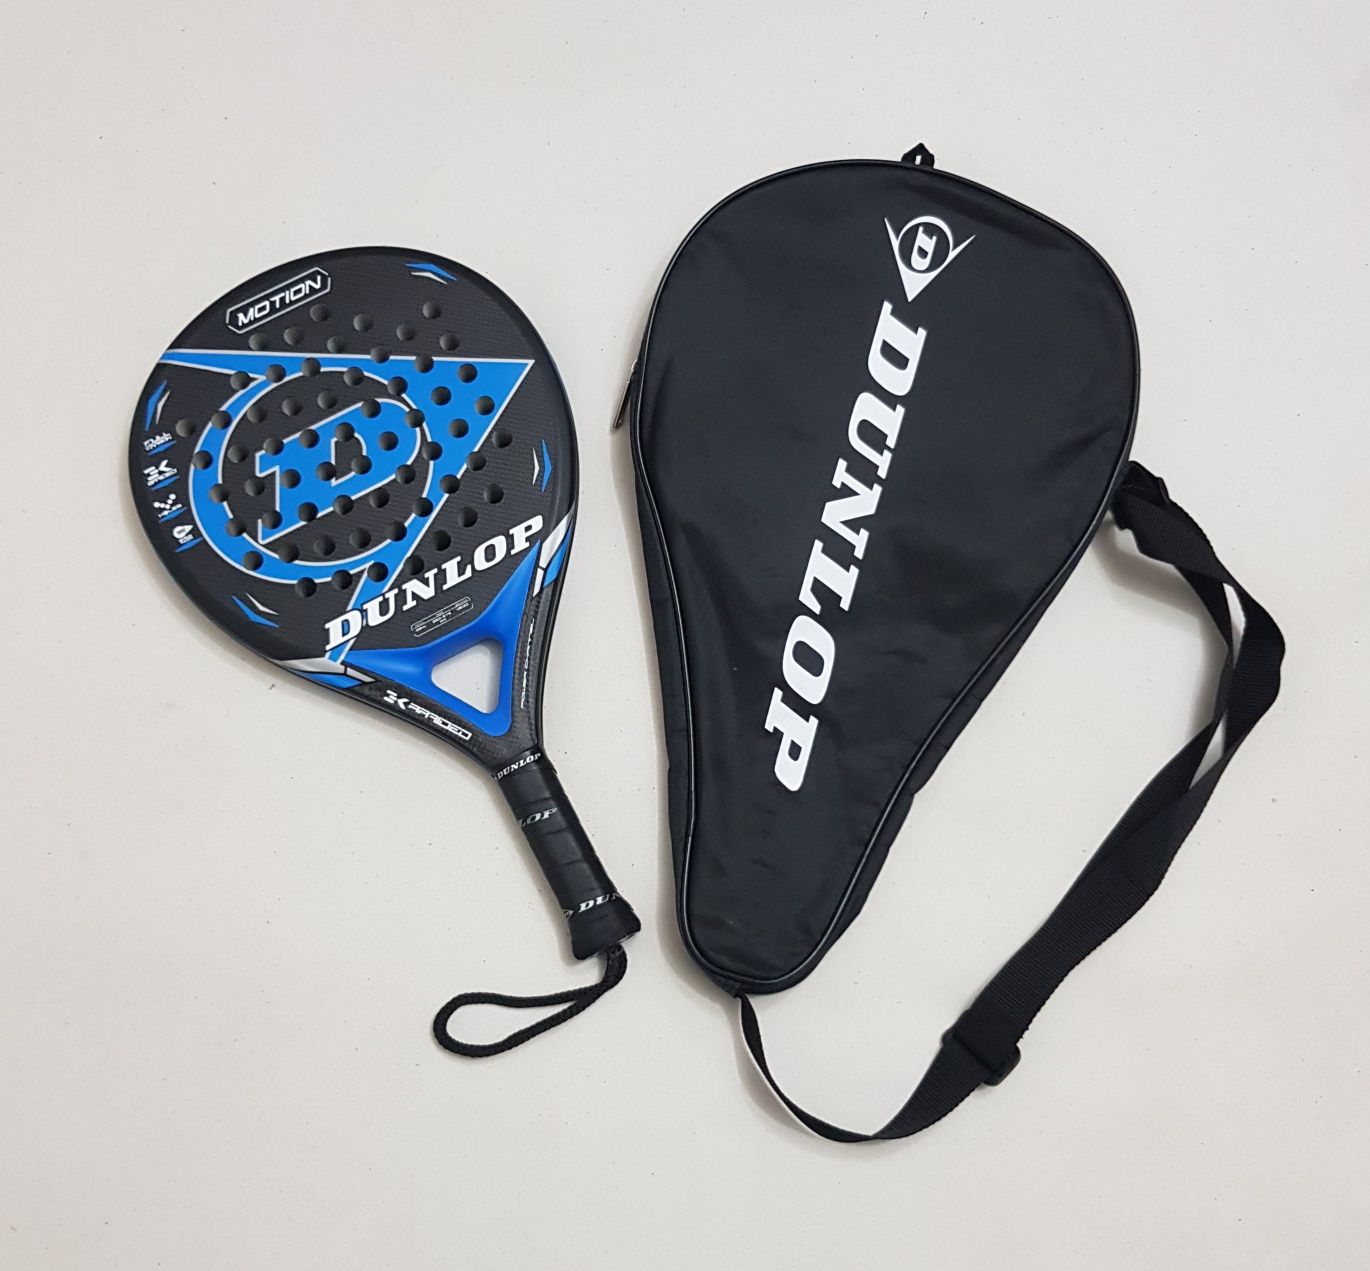 Racheta profesională de padel, tenis DUNLOP Motion Blue Carbon